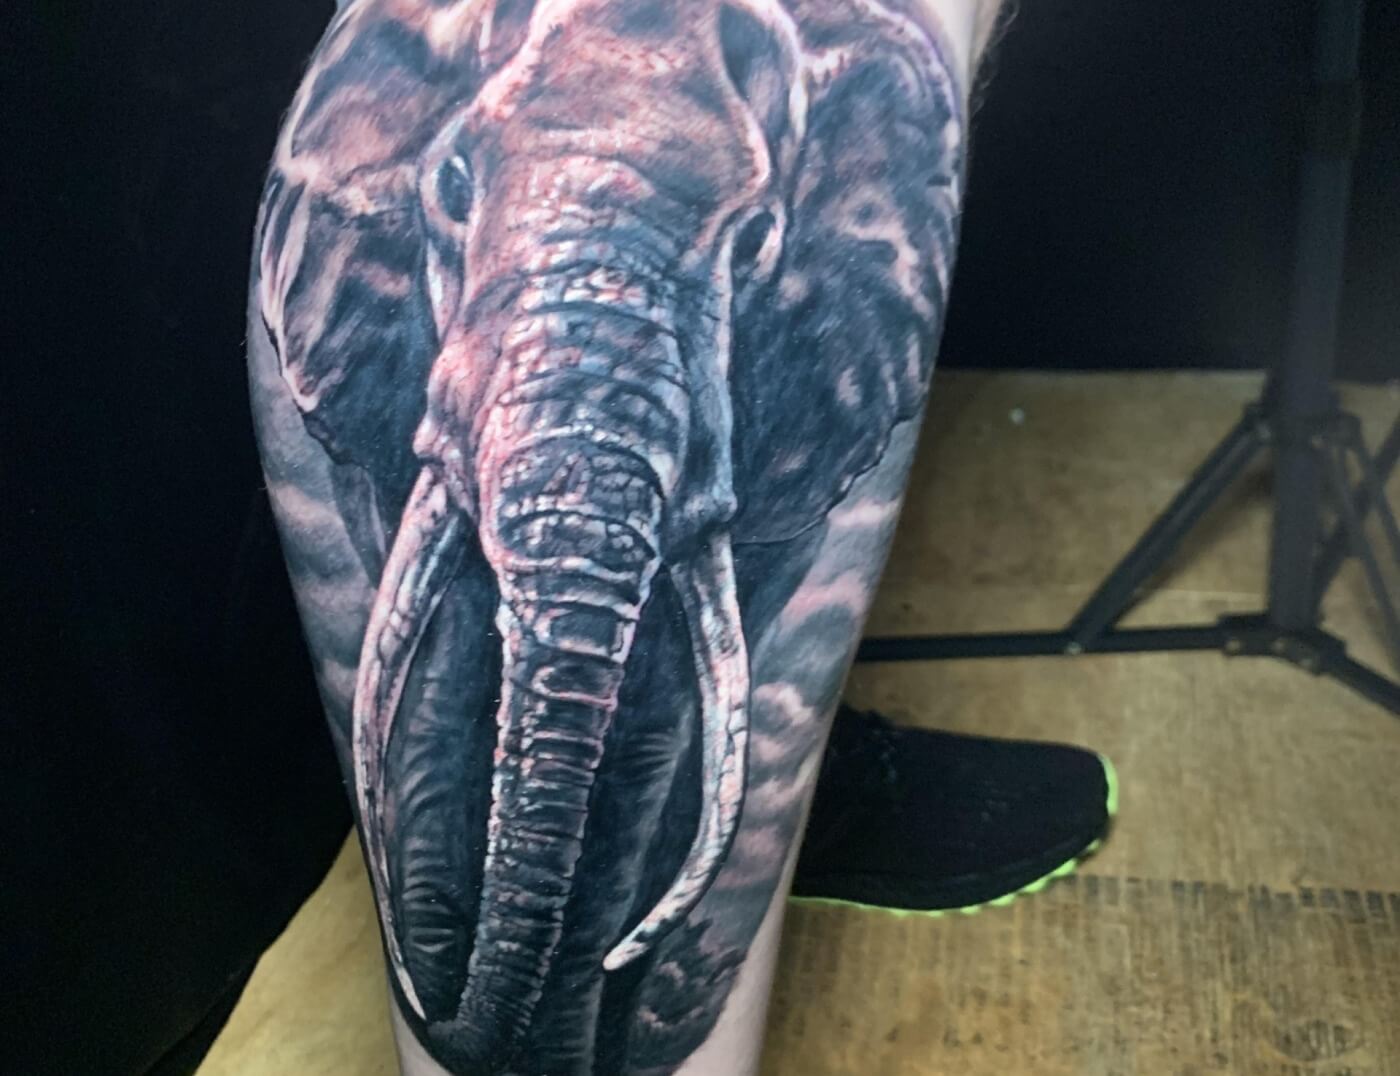 Elephant portrait tattoo by J.R. Outlaw of Iron Palm Tattoos & Body Piercing In Atlanta.